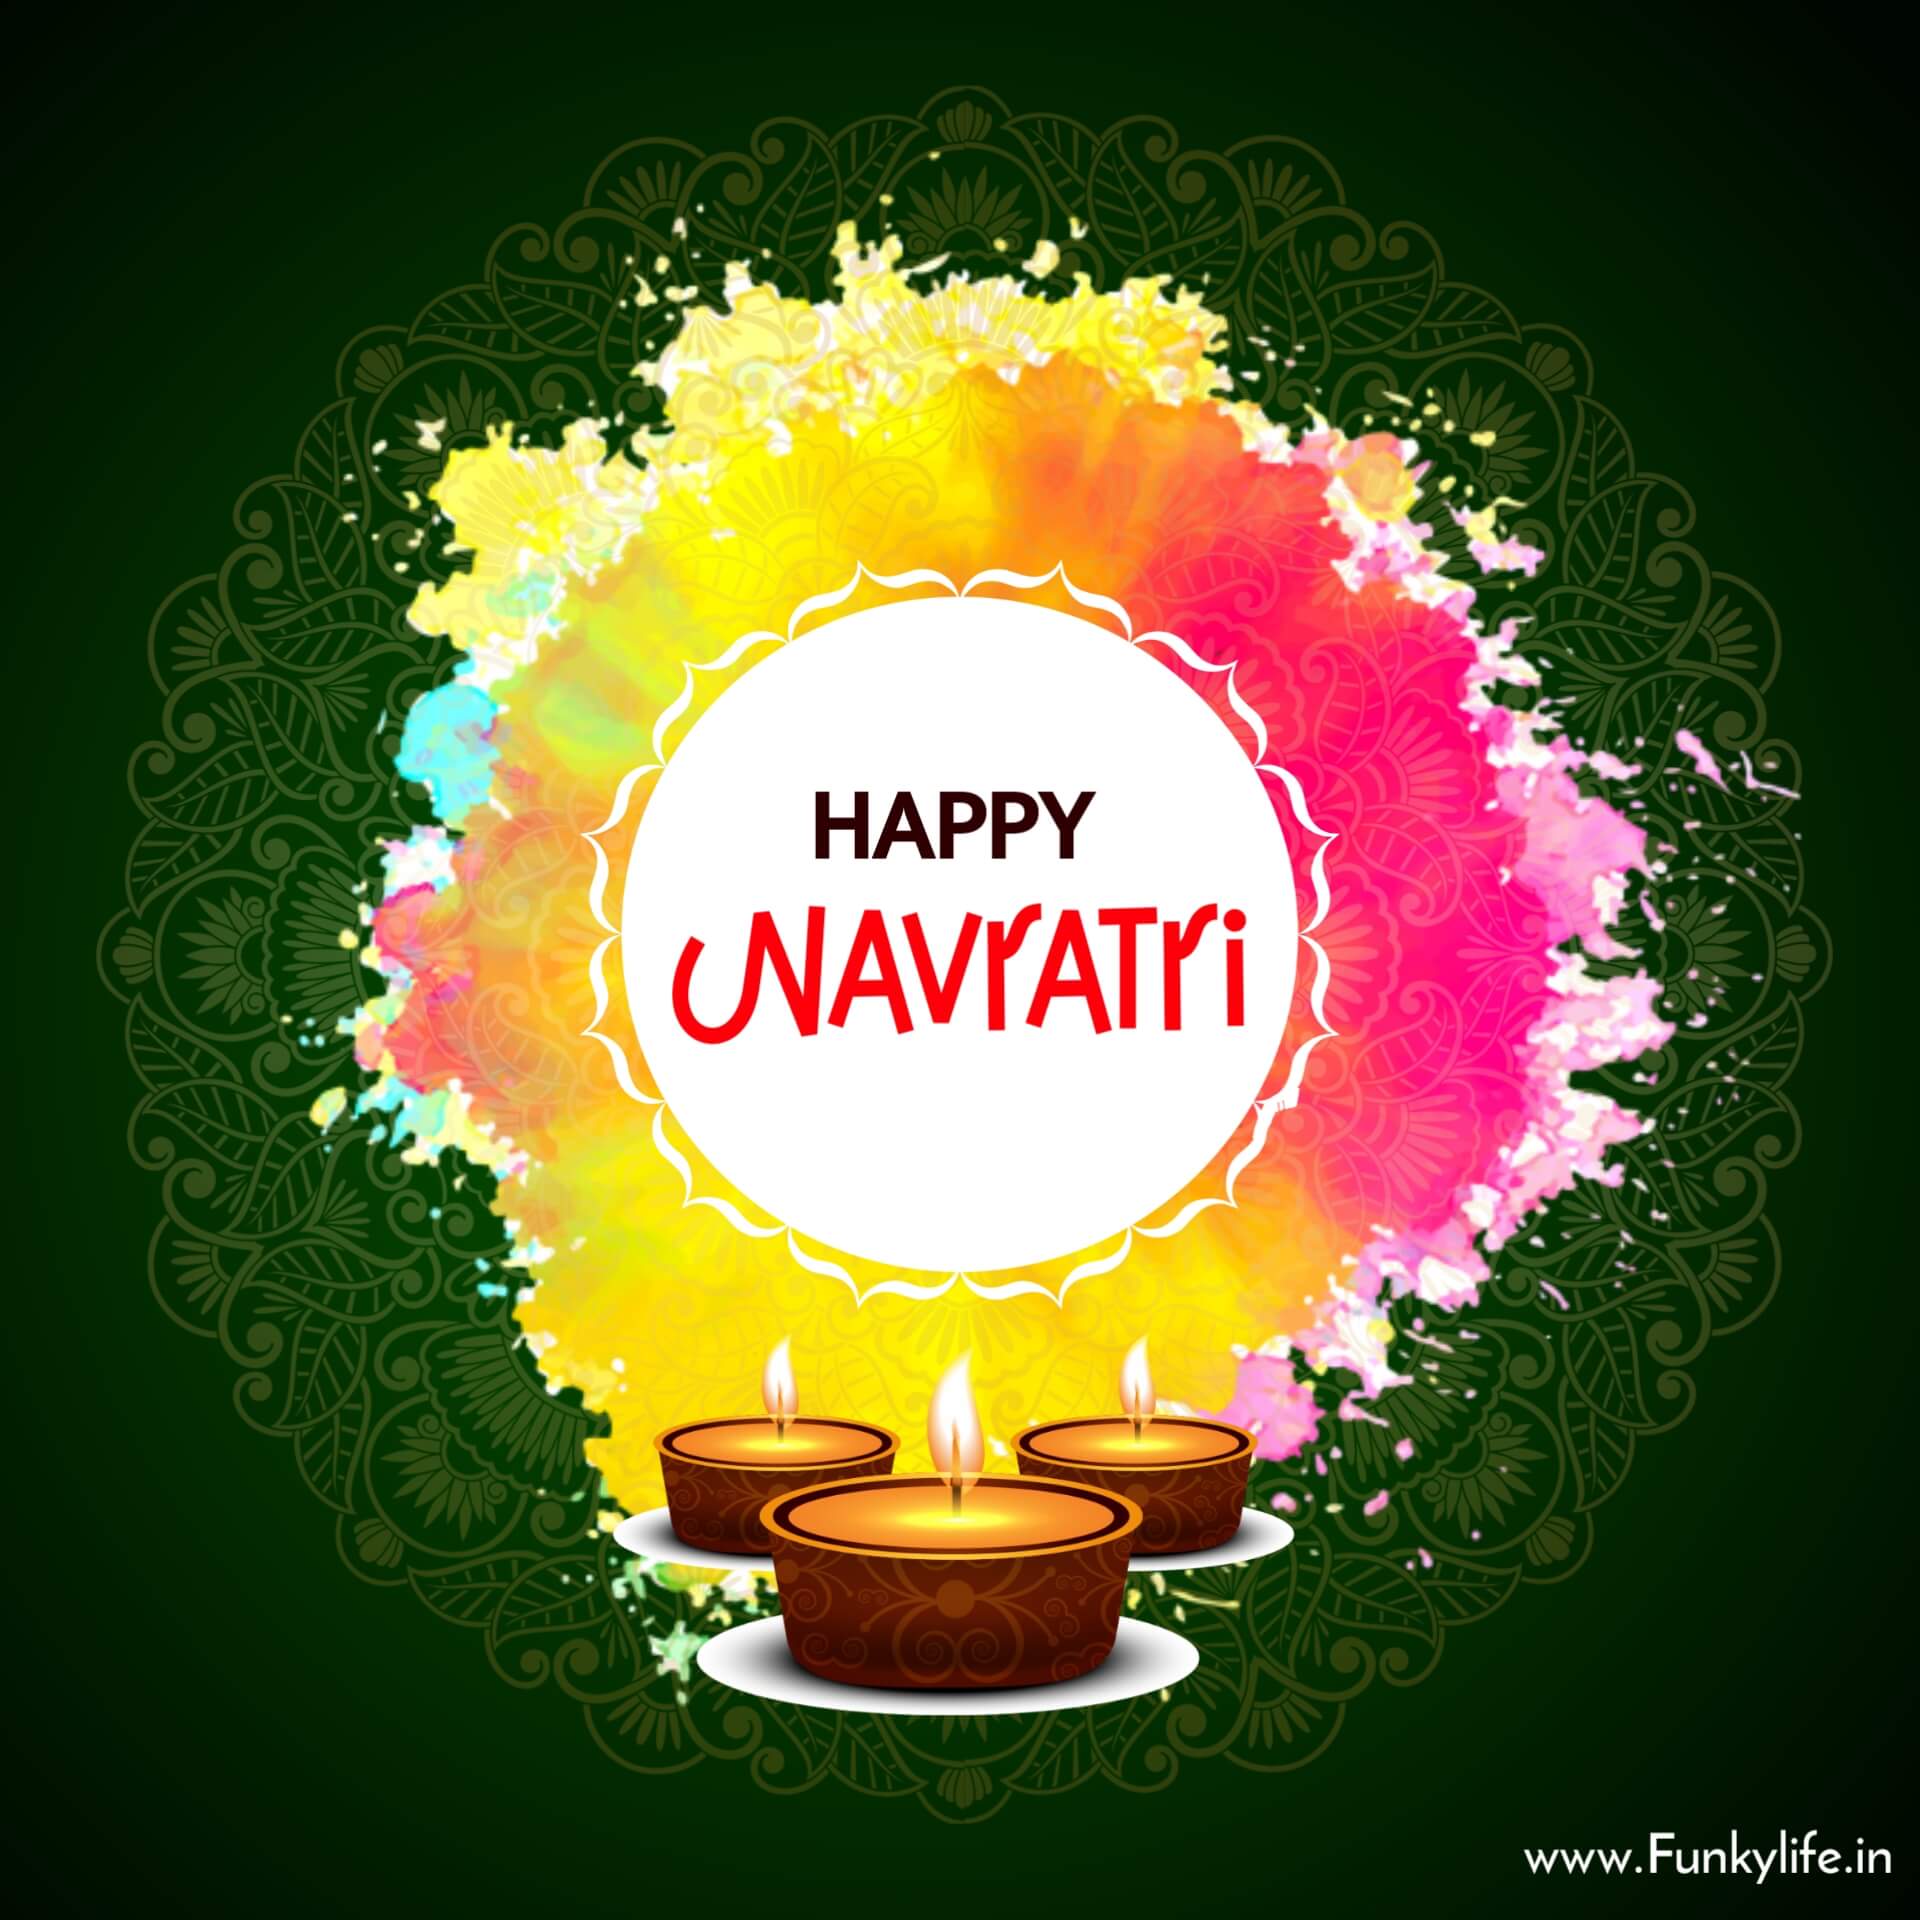 Best Happy Navratri Images